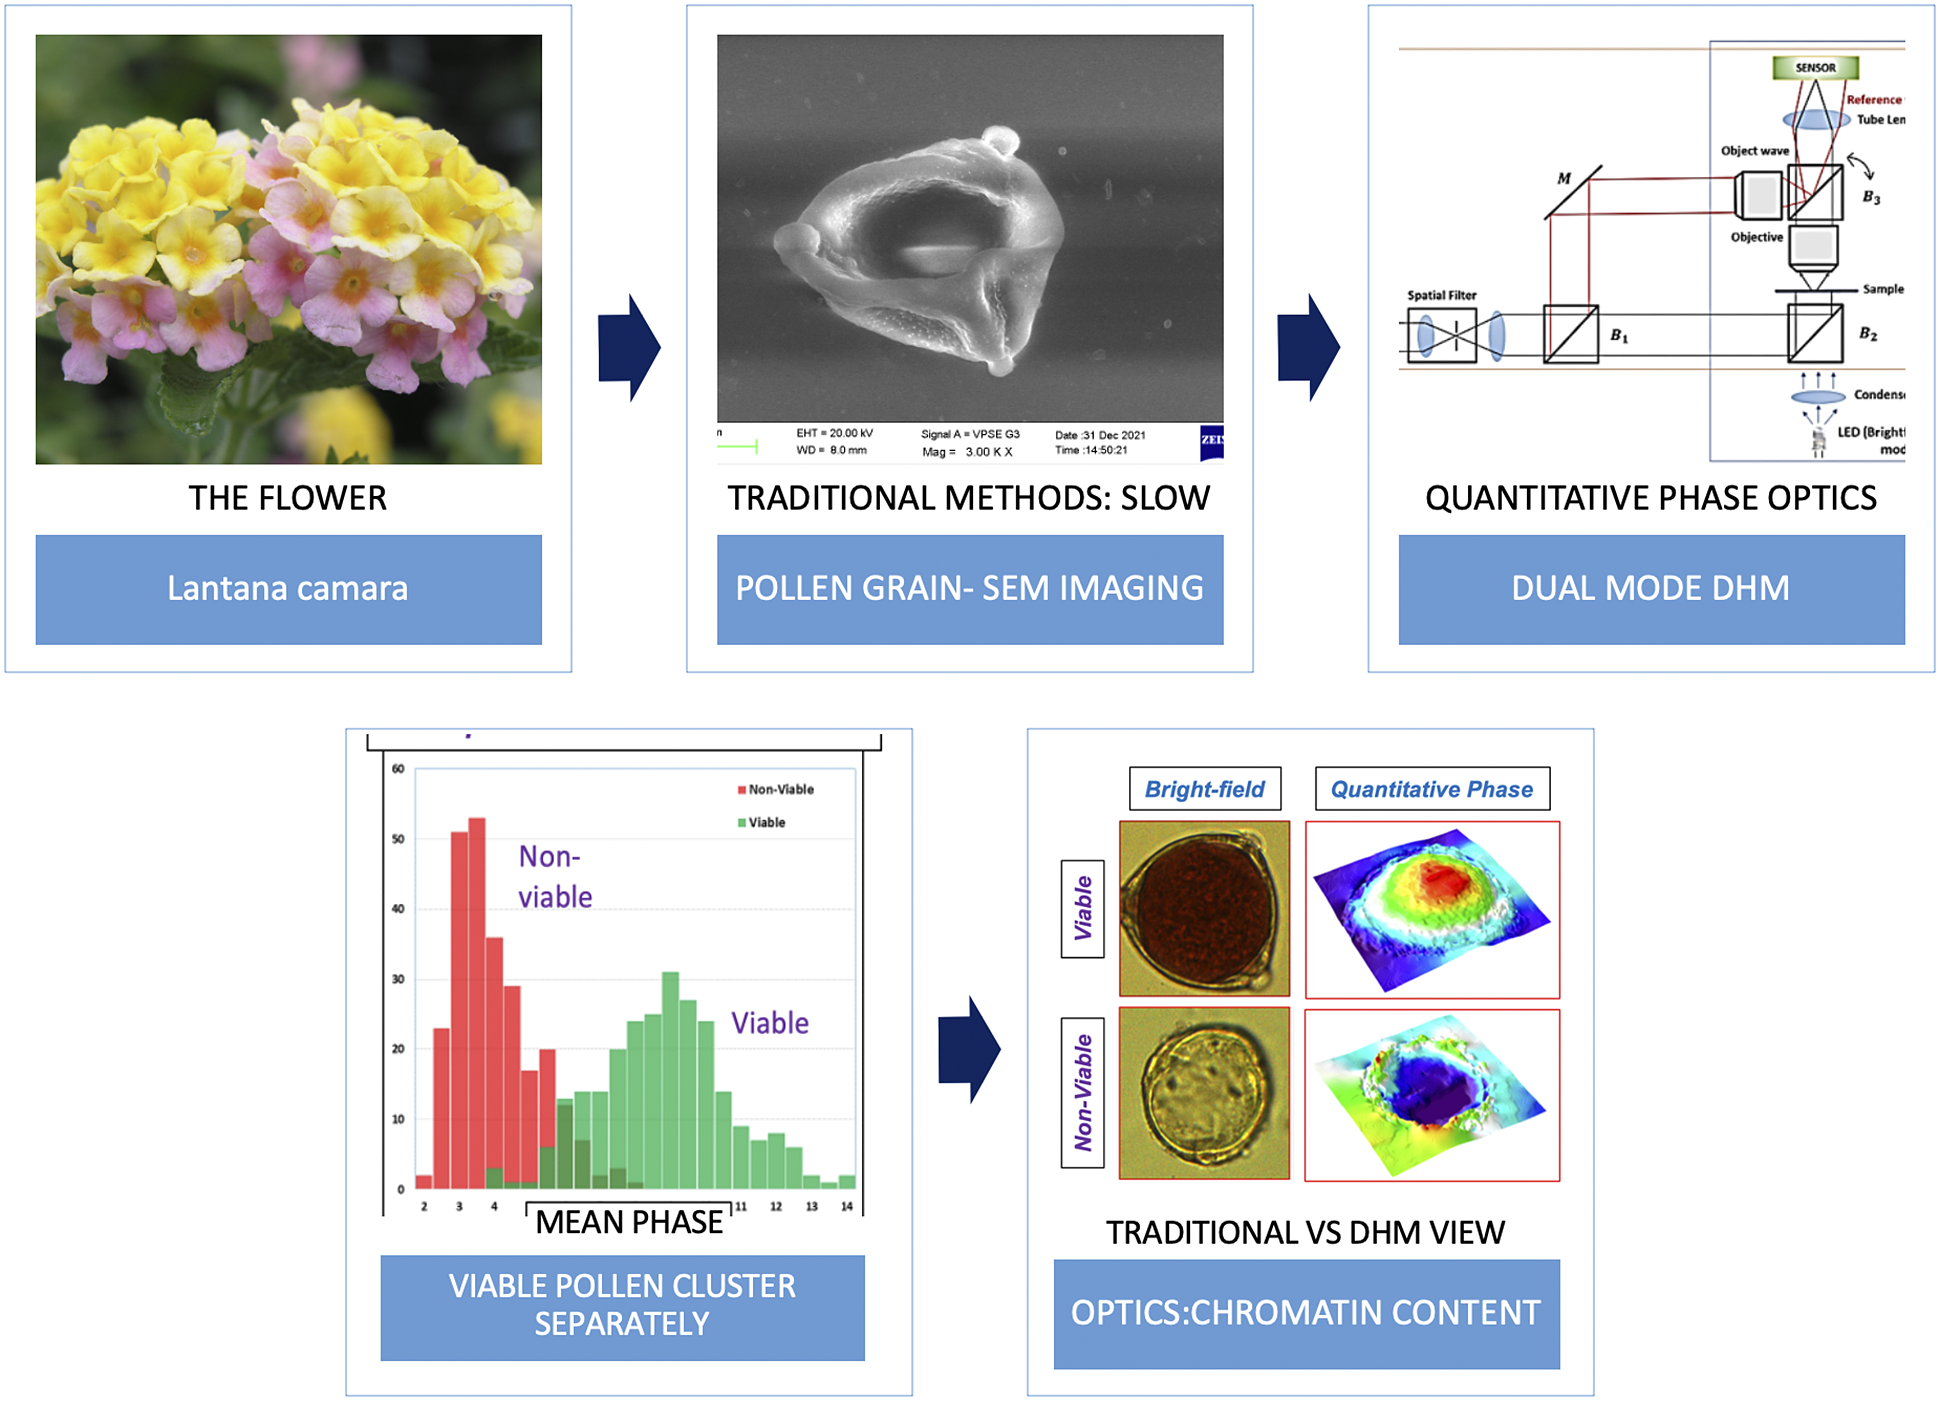 Quantification of pollen viability in Lantana camara by digital